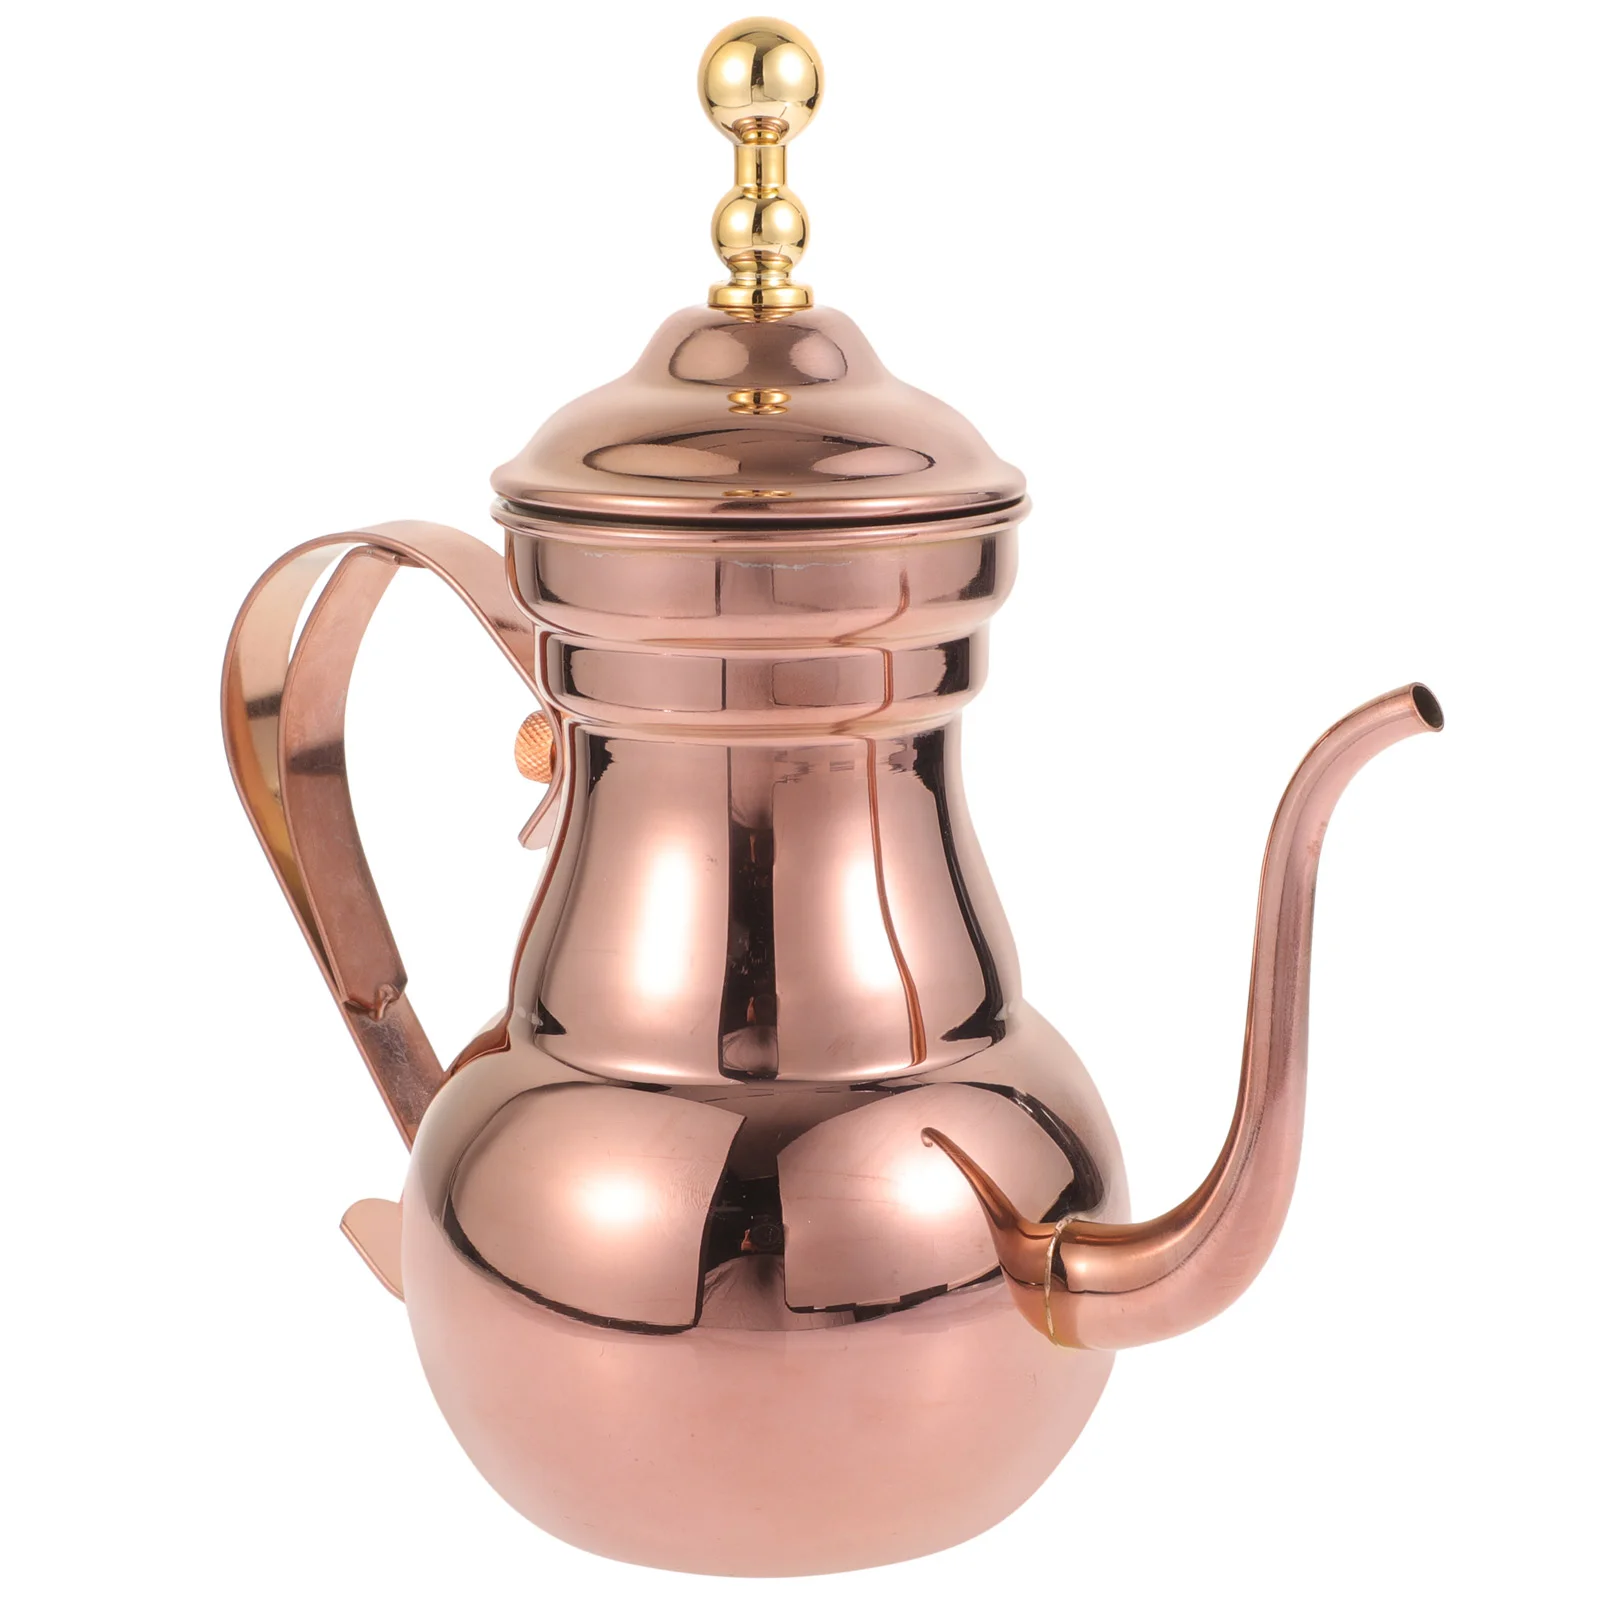 

Arabic Coffee Pot Long Narrow Spout Tea Stainless Steel Kettle Metal Handle Strainer Teapot